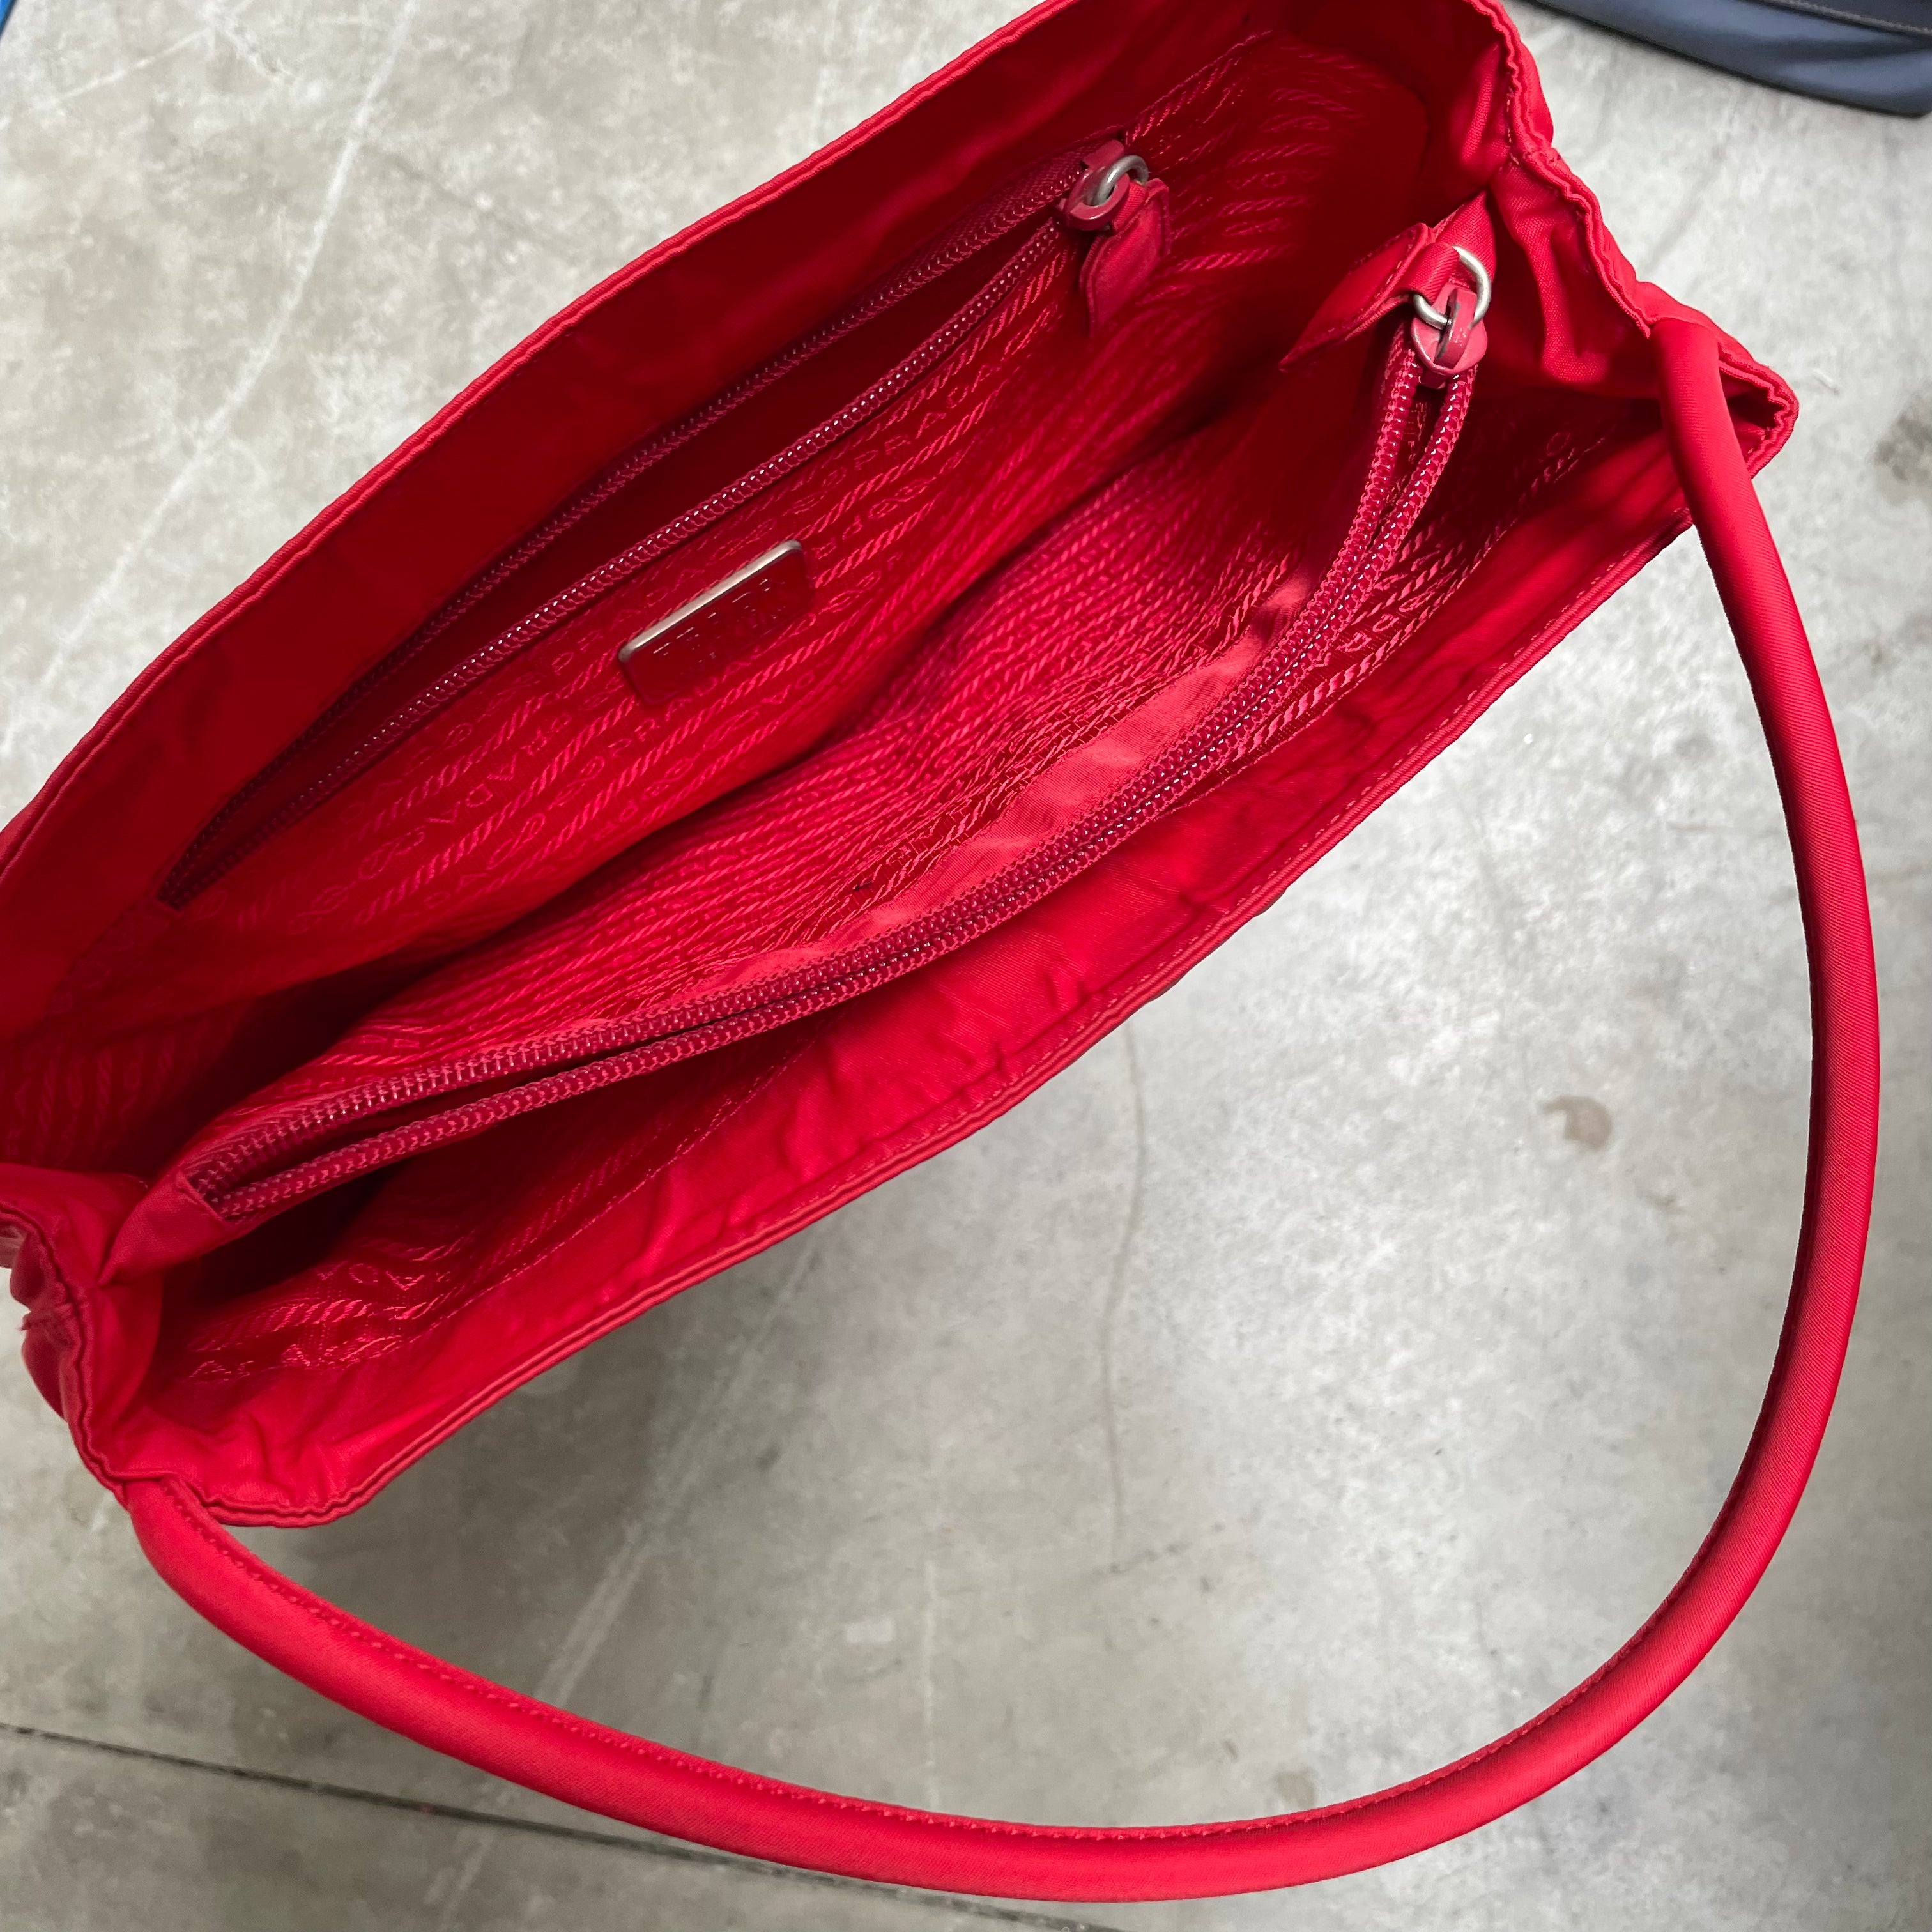 Prada Double Strap Red Hand Bag